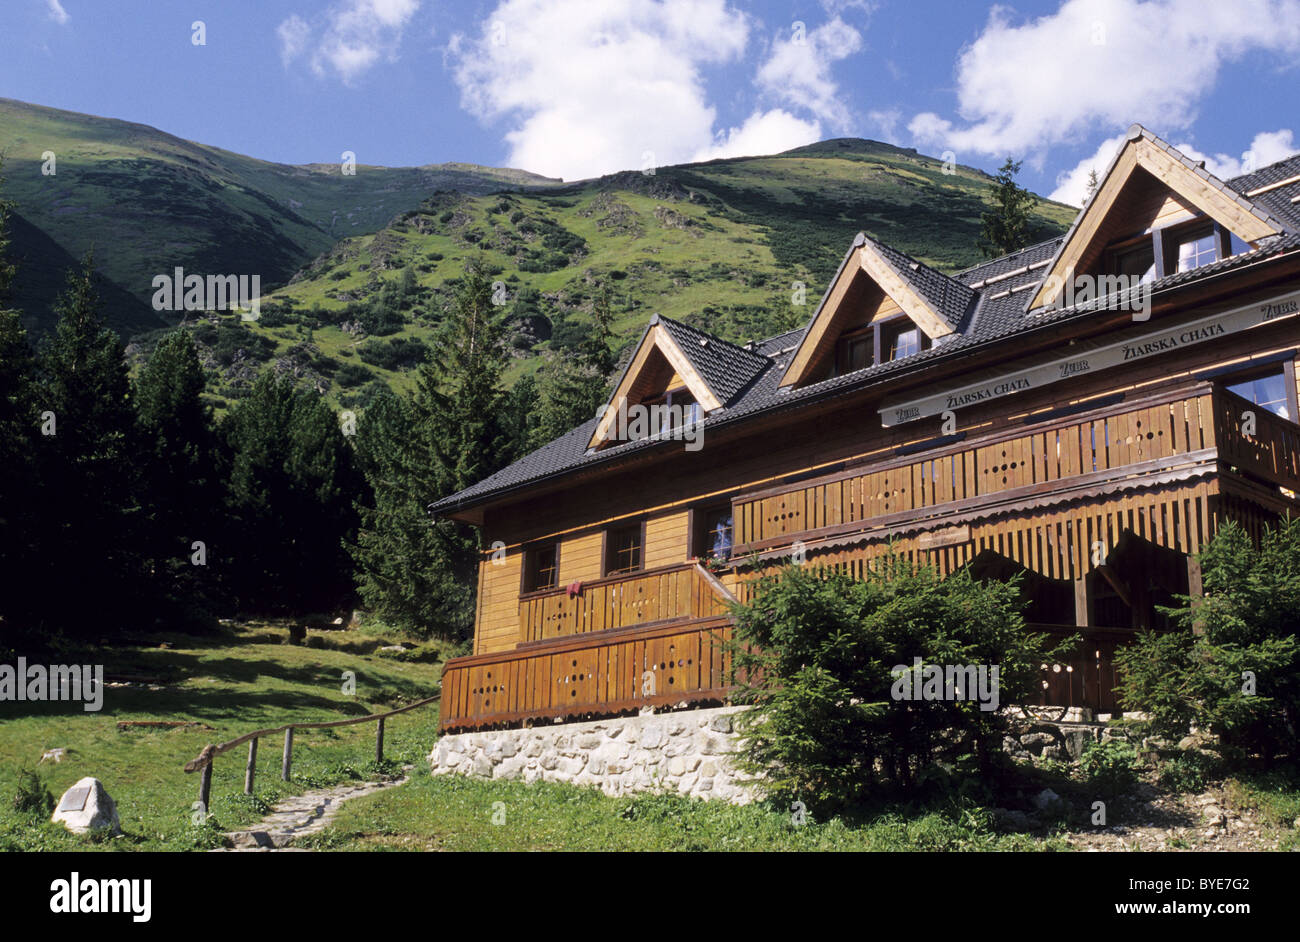 The mountain refuge Ziarska chata in Rohace, part of NP High Tatras, Slovakia. Stock Photo